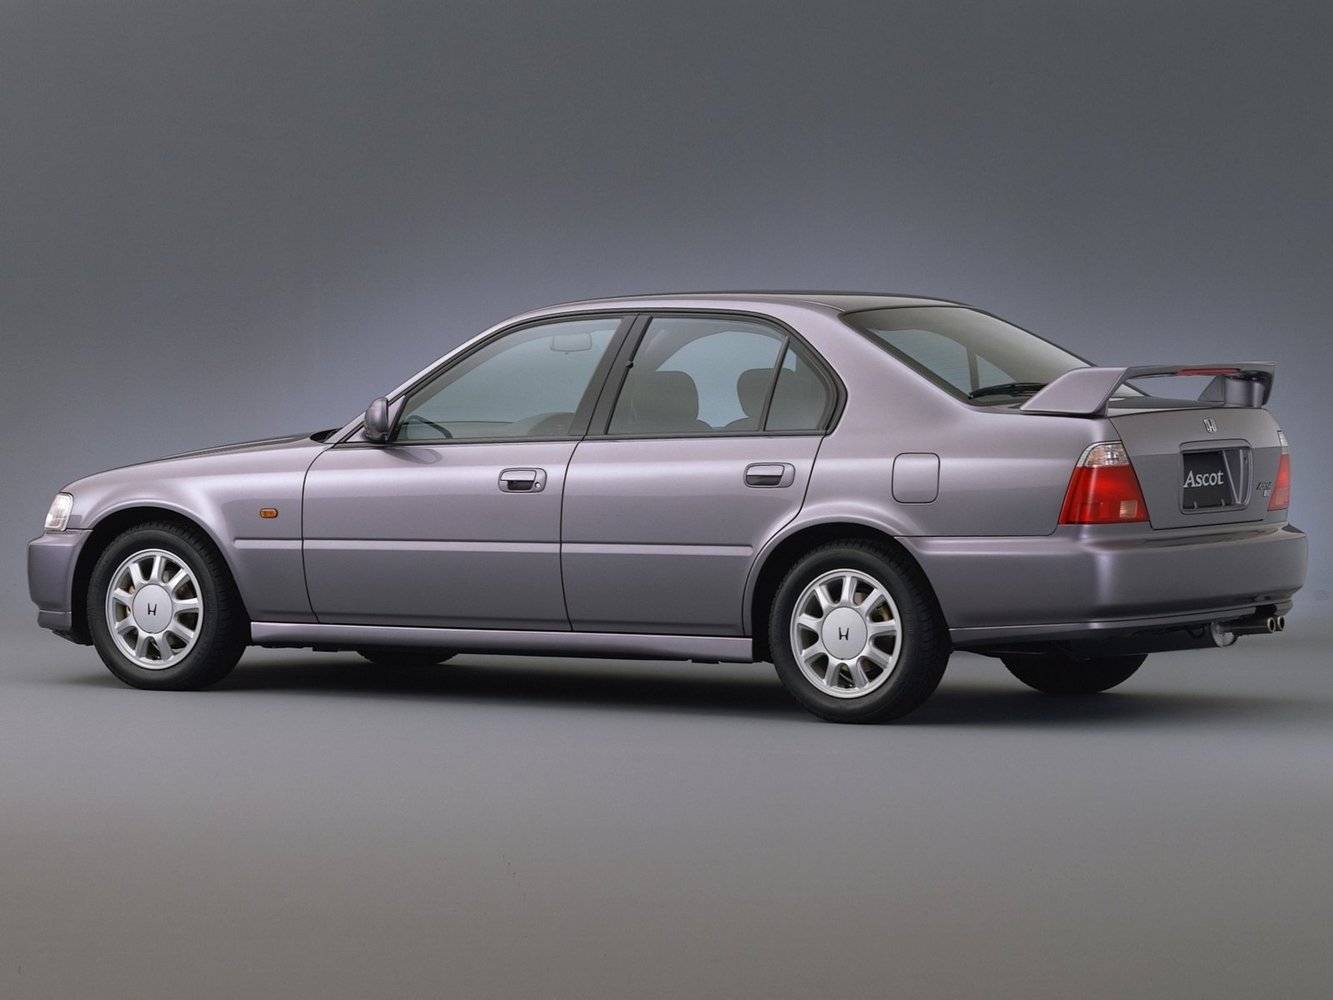 седан Honda Ascot 1993 - 1997г выпуска модификация 2.0 AT (135 л.с.)